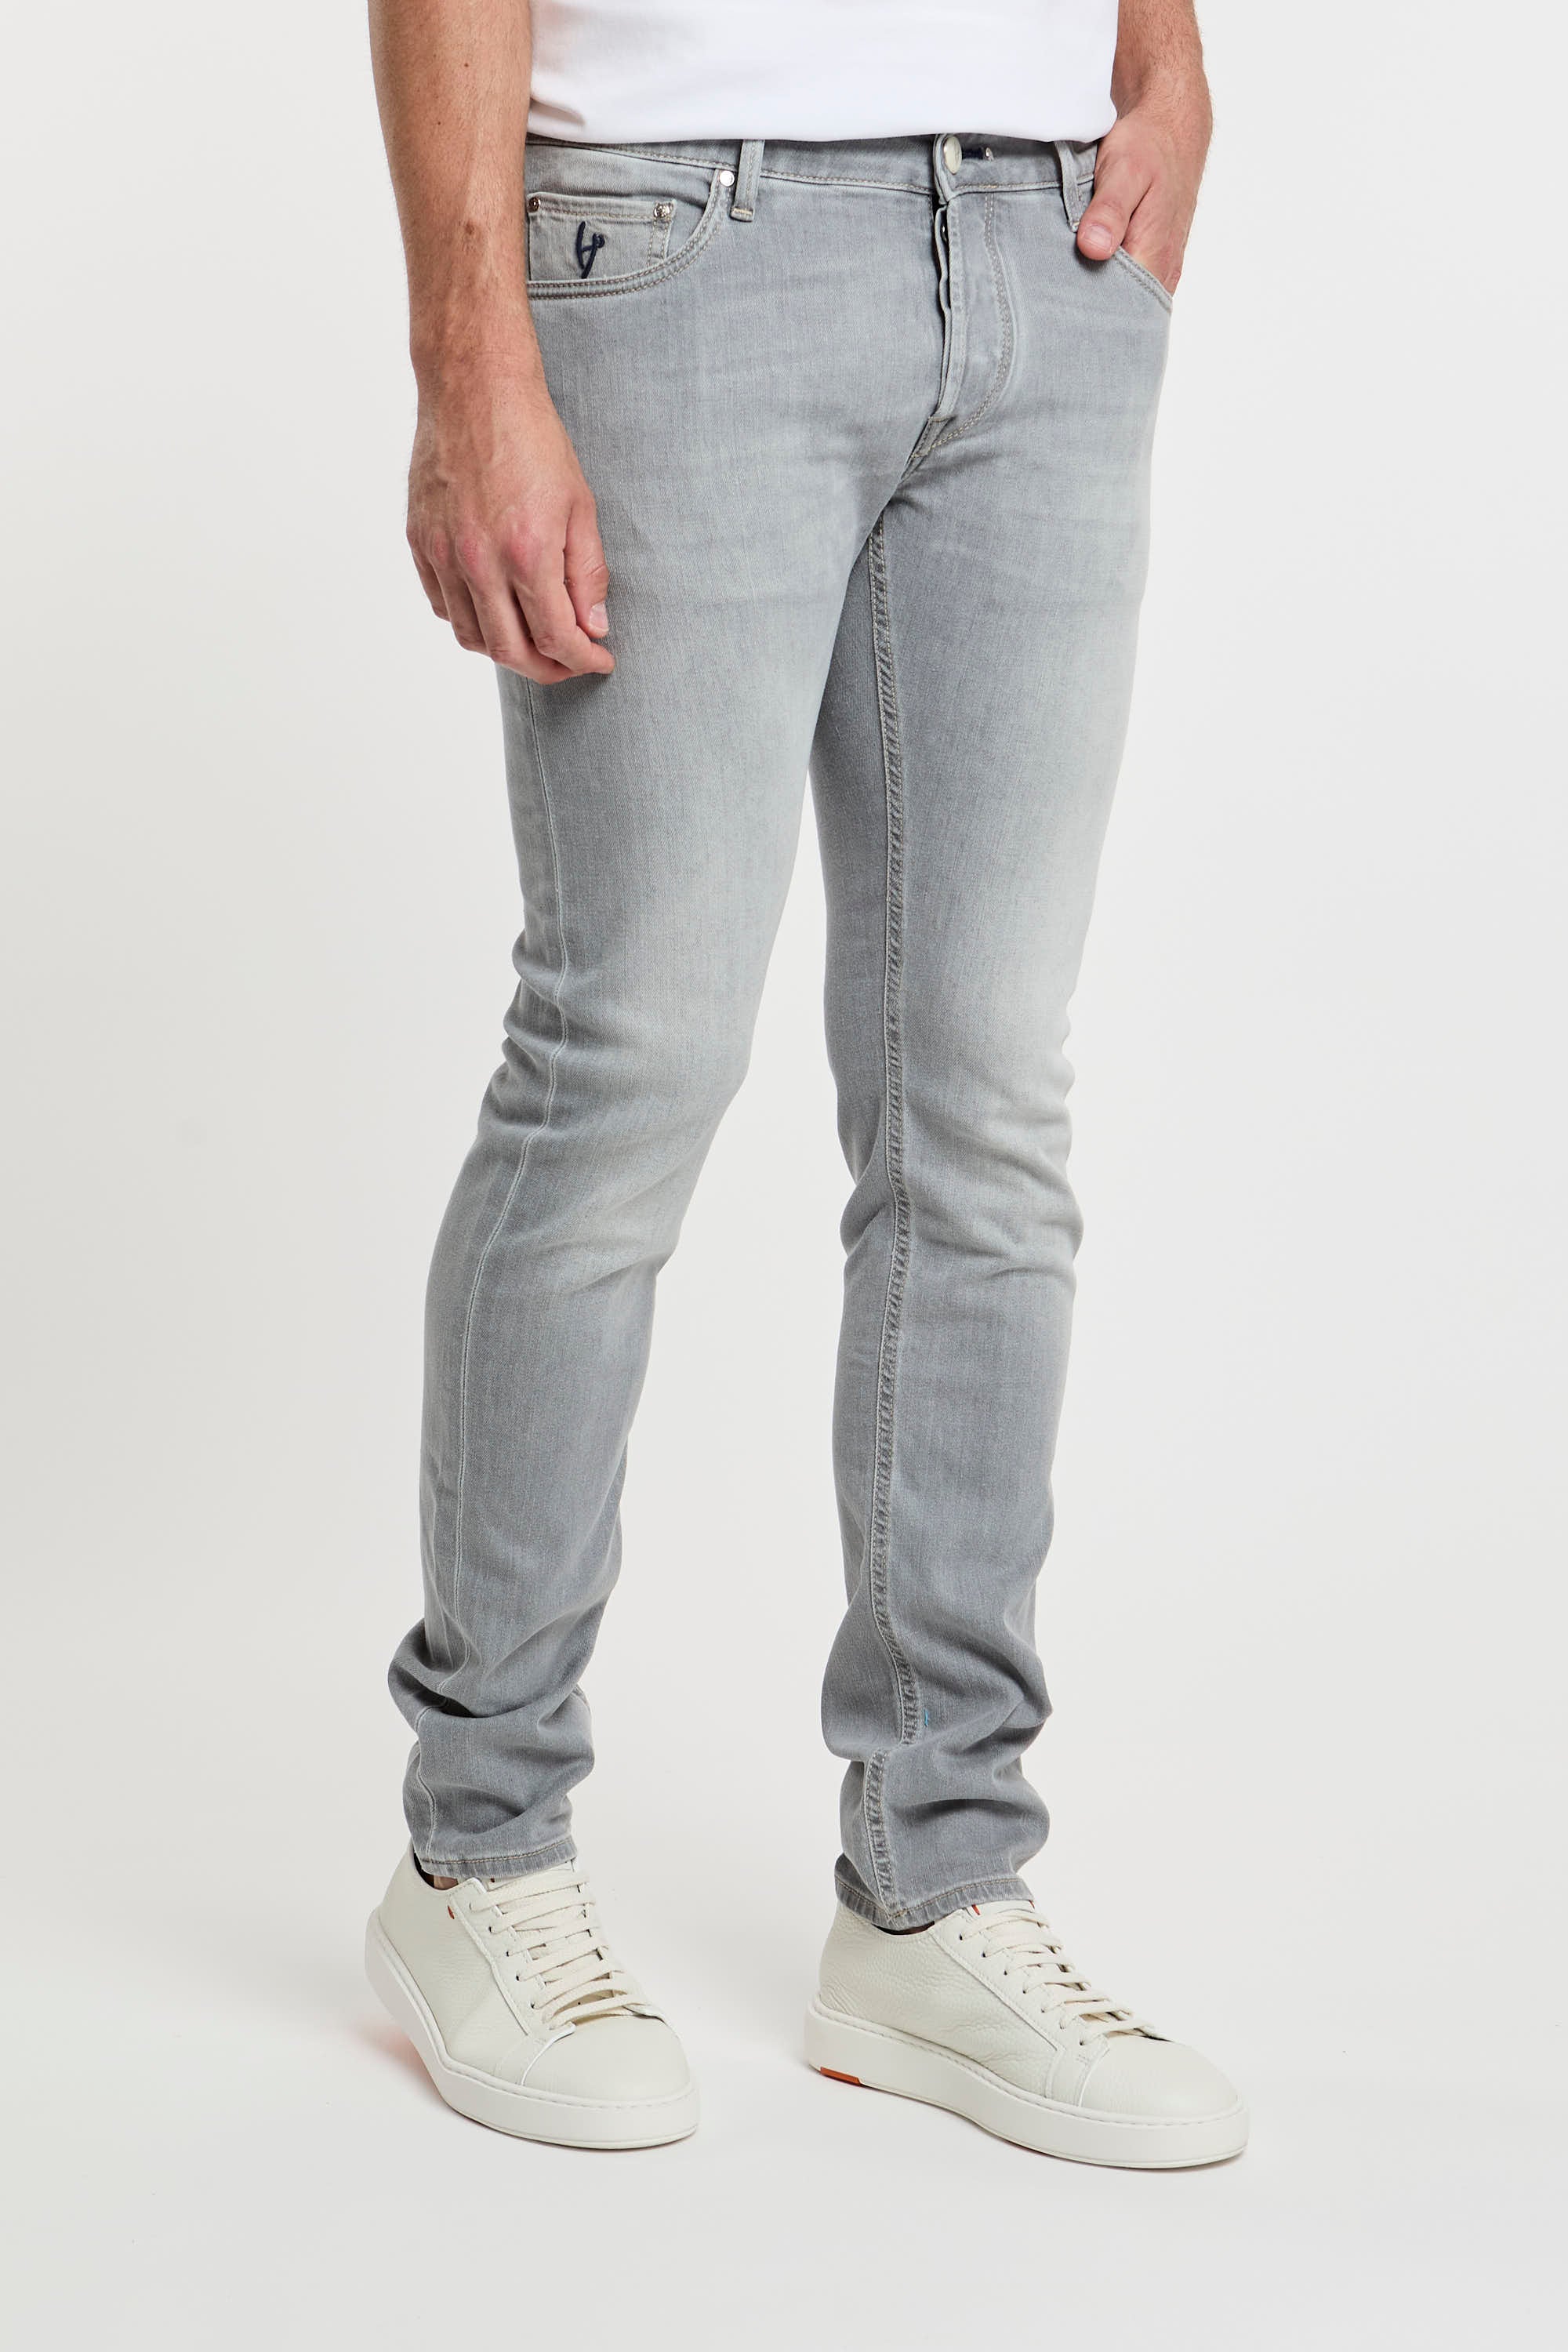 Handpicked Jeans Orvieto Cotton Grey-3